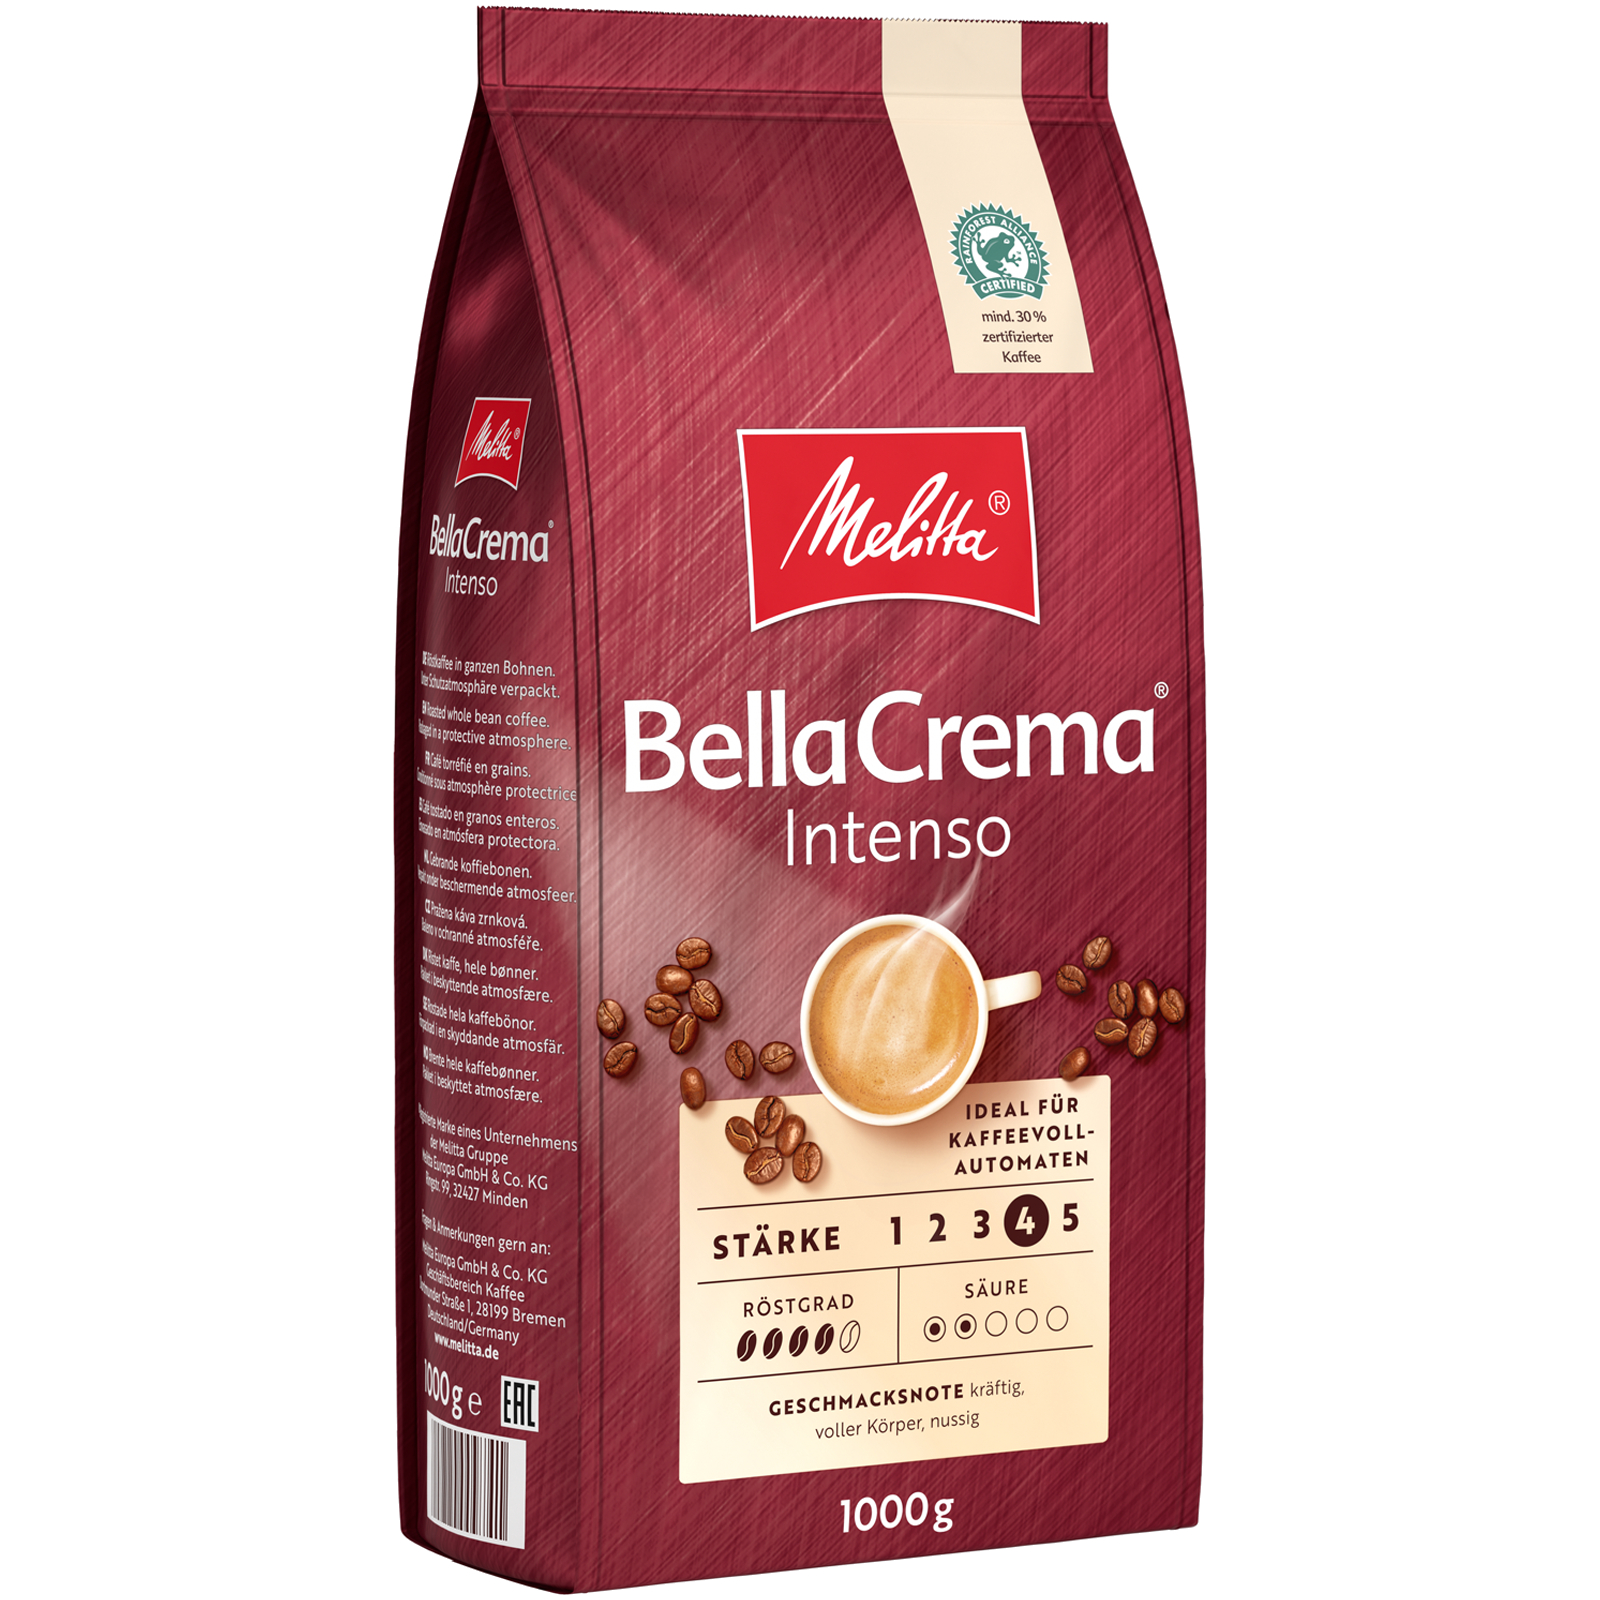 Kaffeebohnen BellaCrema Probierset MELITTA 4x1kg